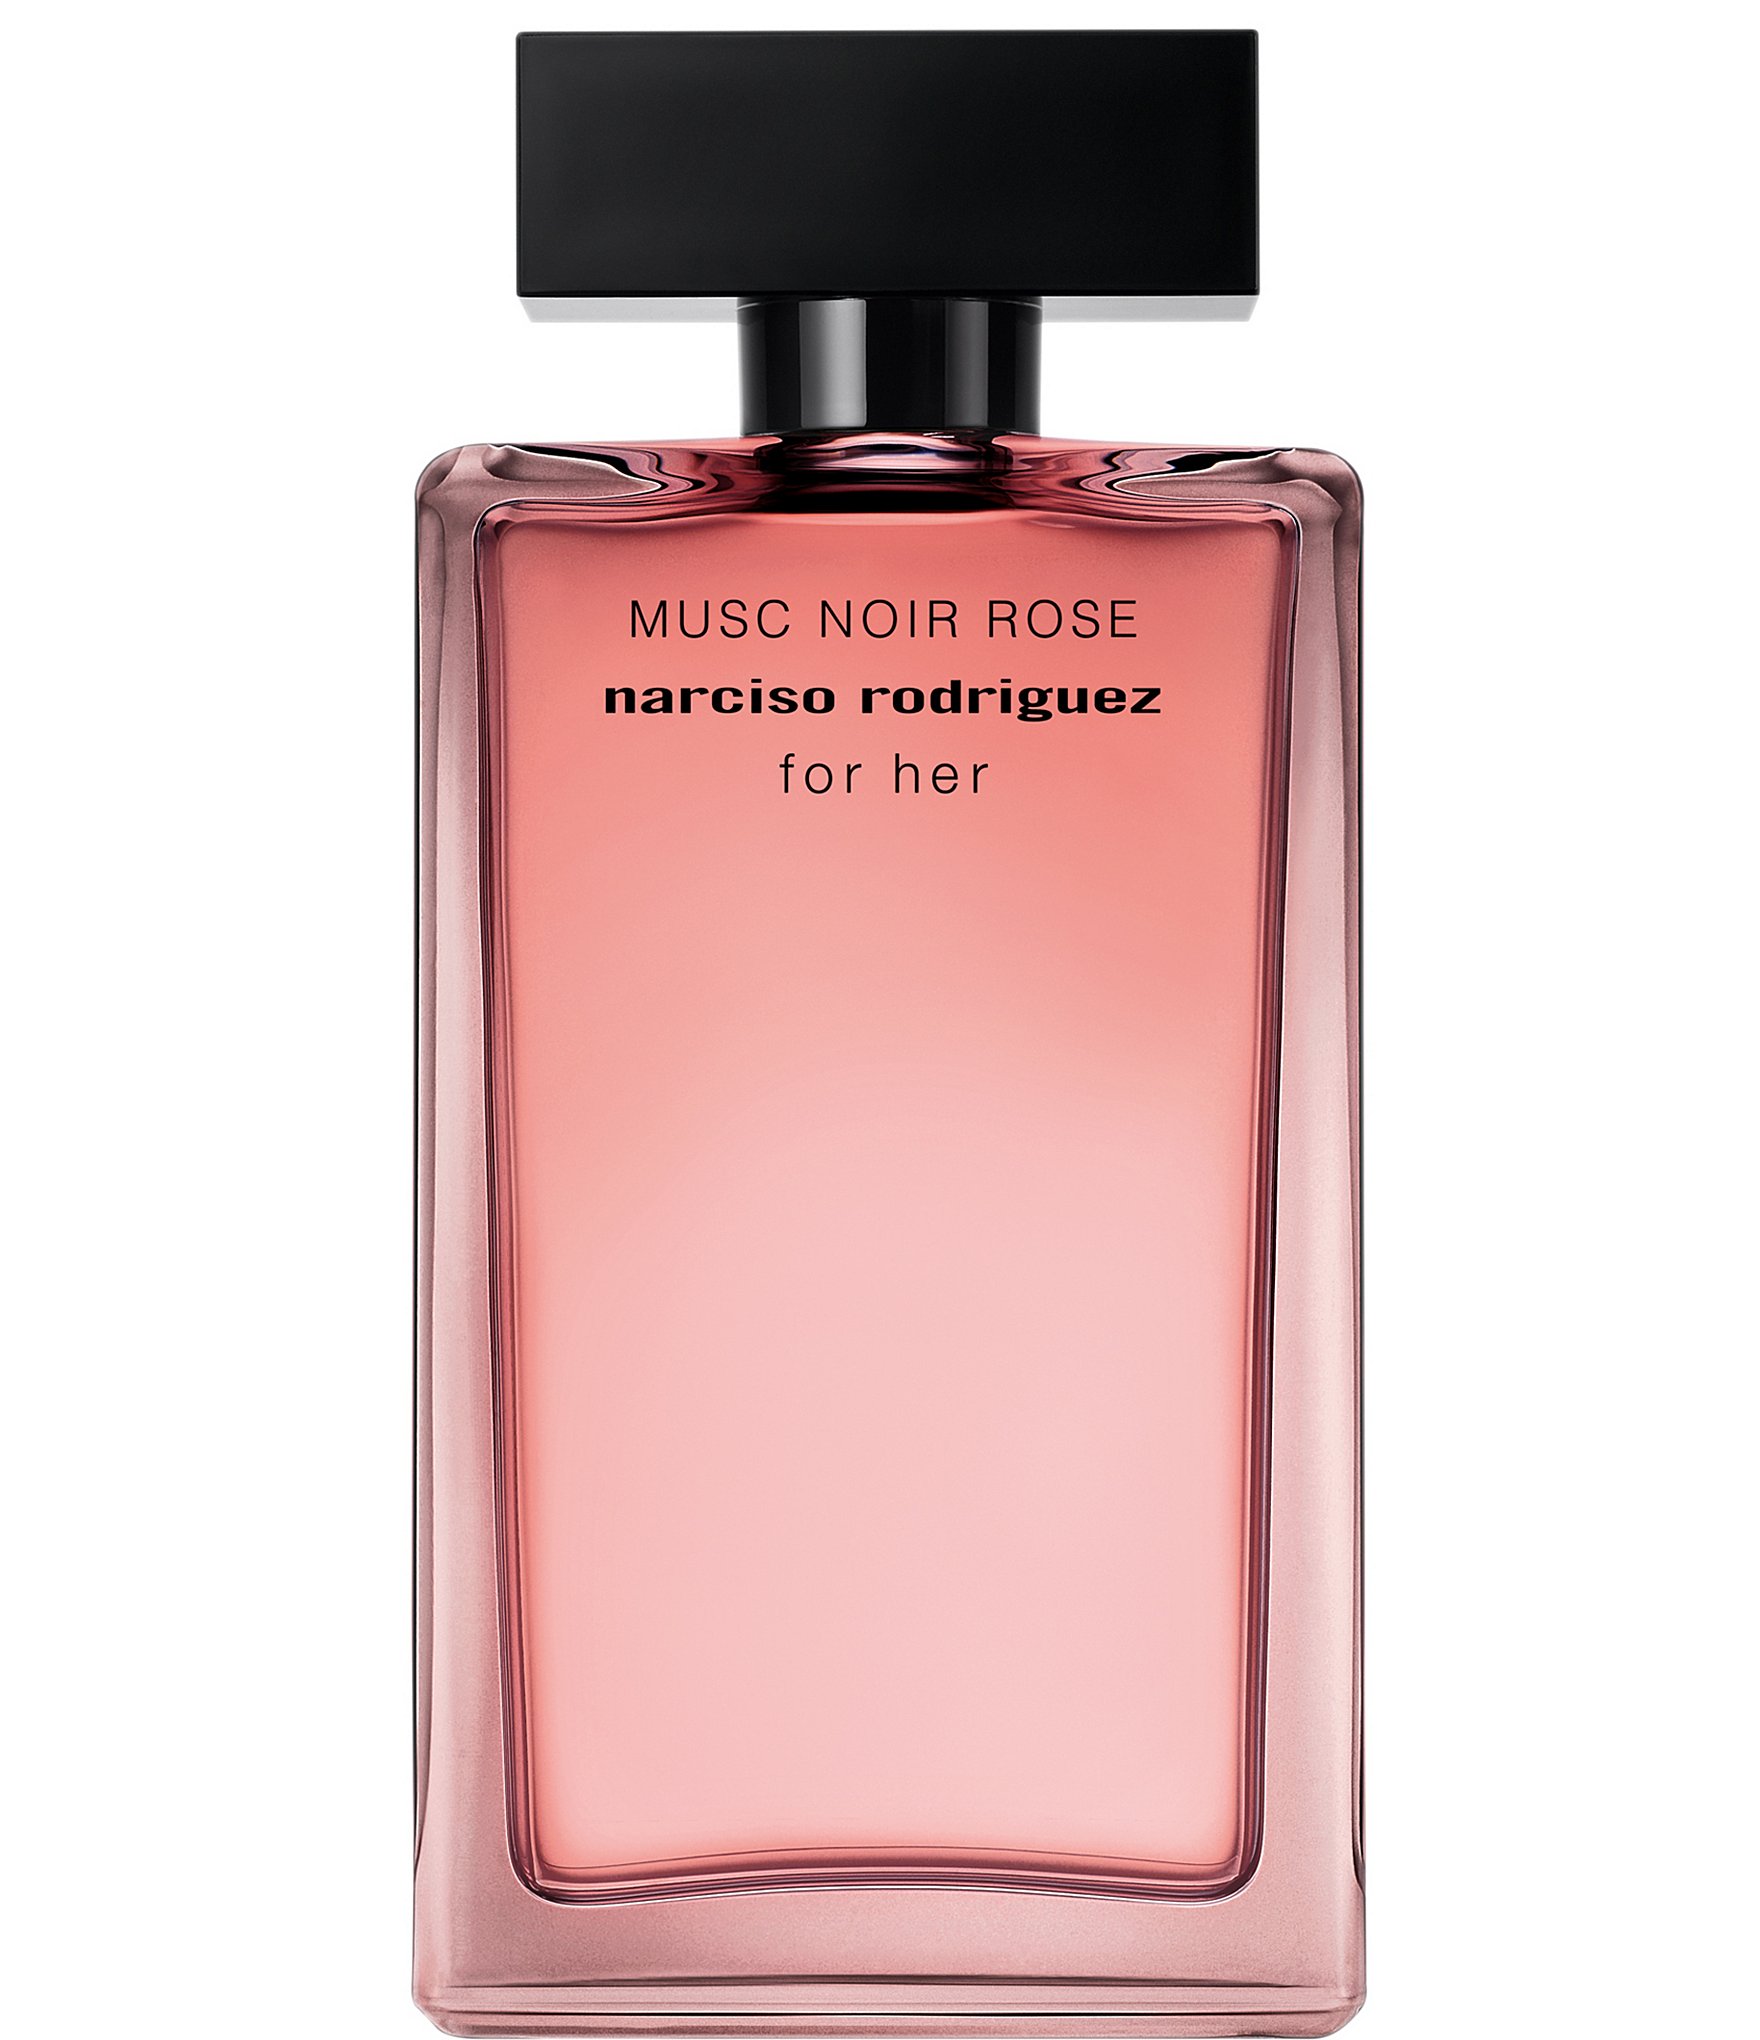 Narciso Rodriguez Fragrance, Perfume, & Cologne for Women & Men